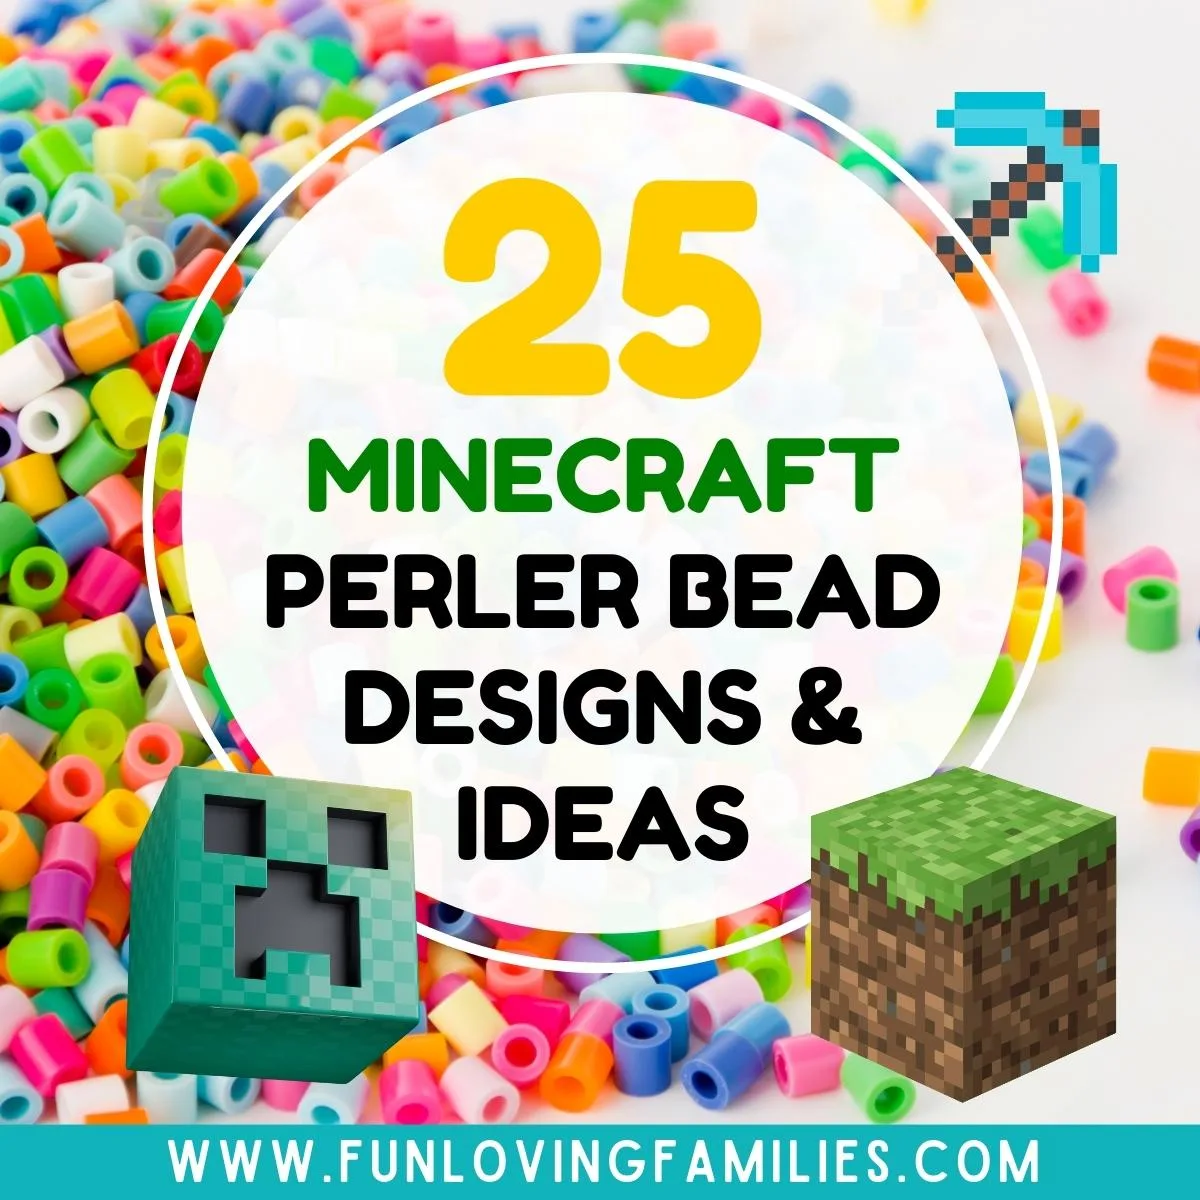 perler beads tutorial